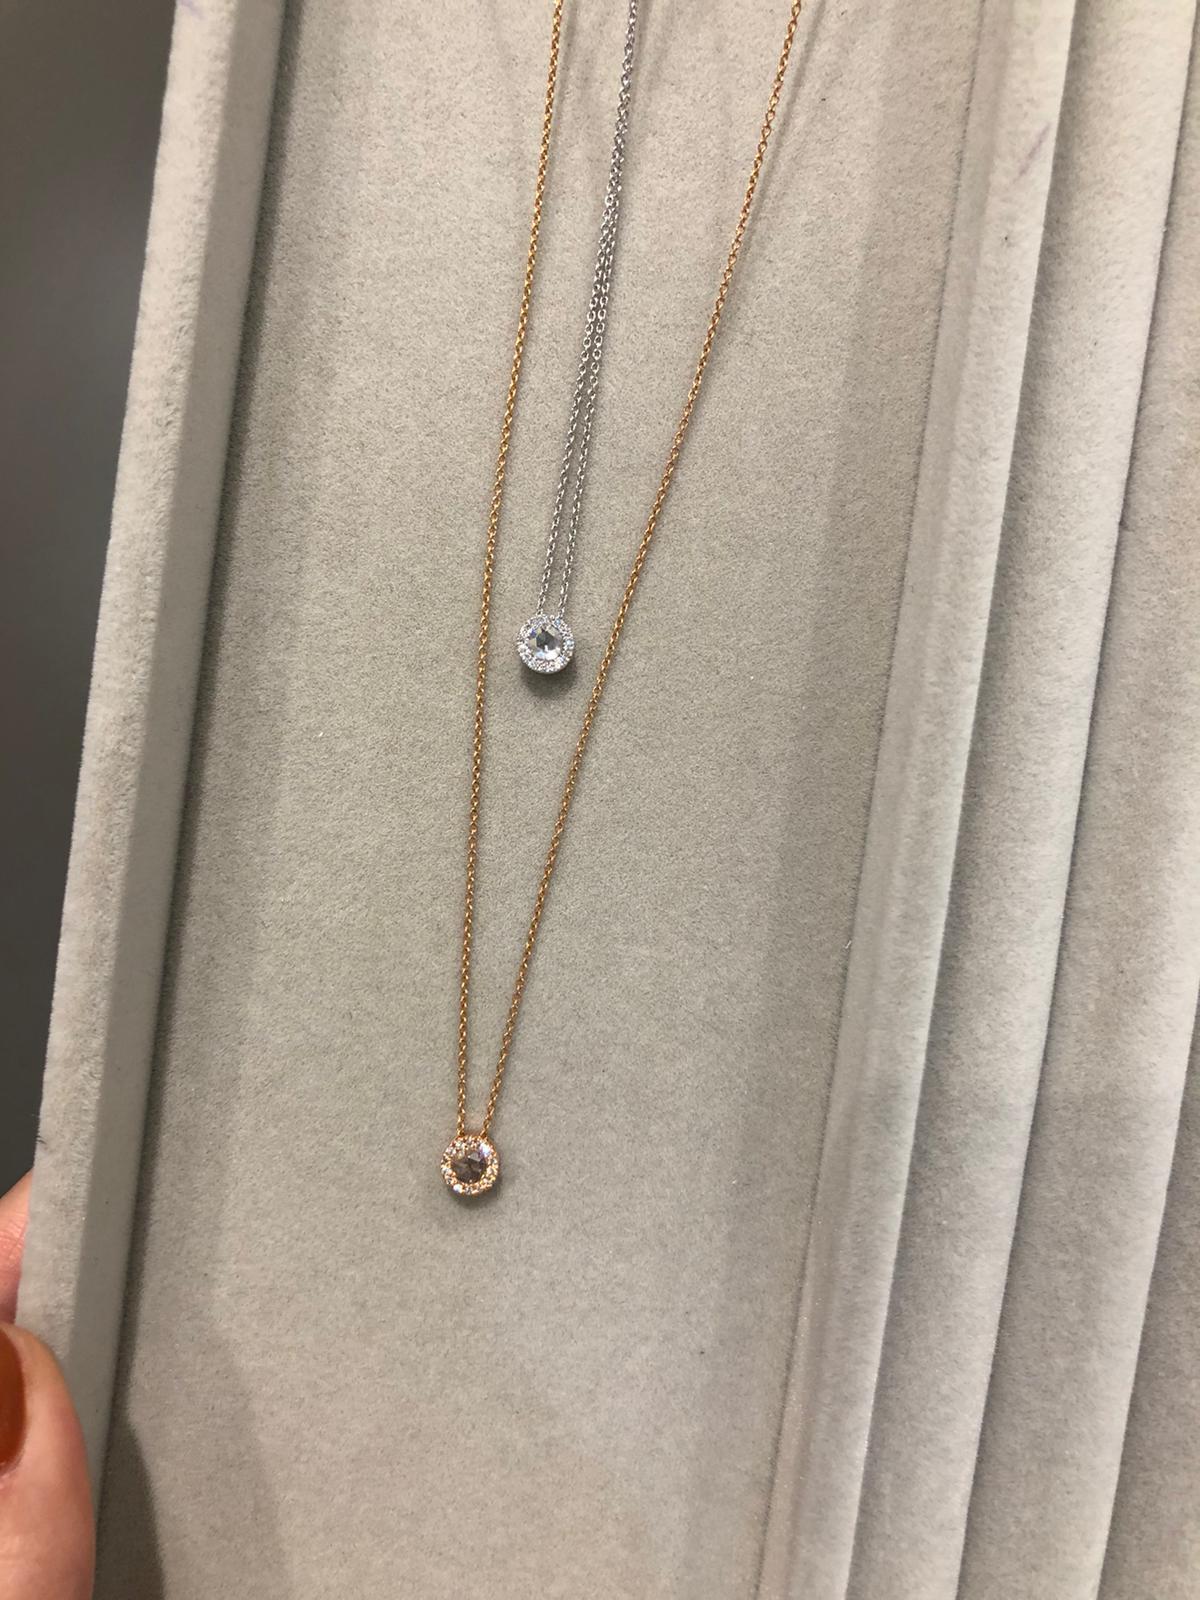 PANIM 0.22 Rosecut Drop Pendant Necklace in 18 Karat Rose Gold For Sale 5